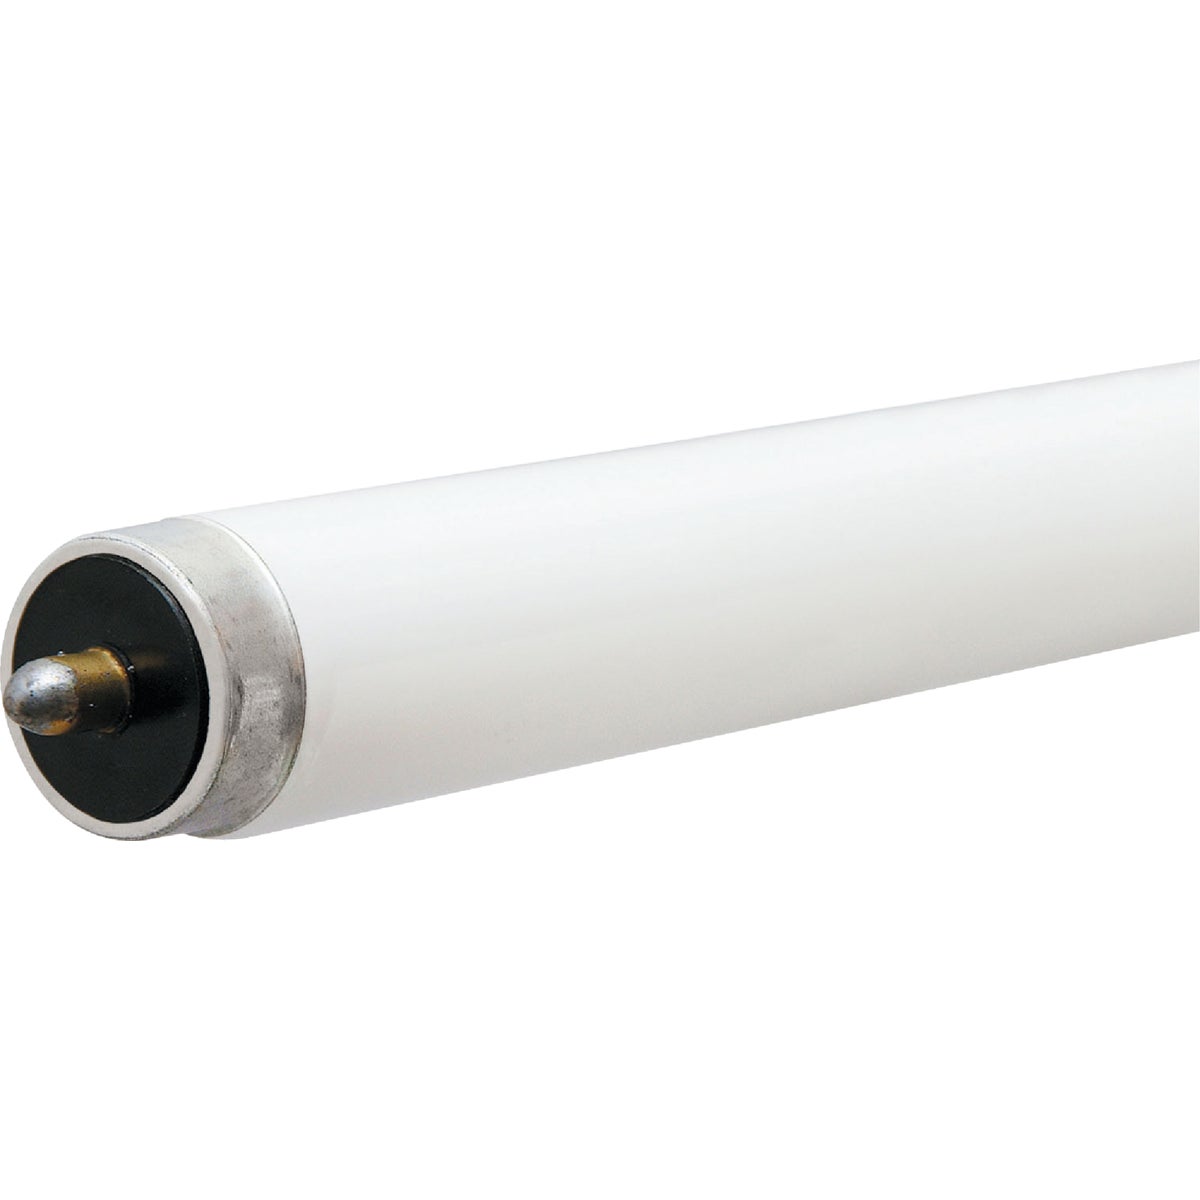 Philips 59W 96 In. Cool White T8 Single Pin Fluorescent Tube Light Bulb